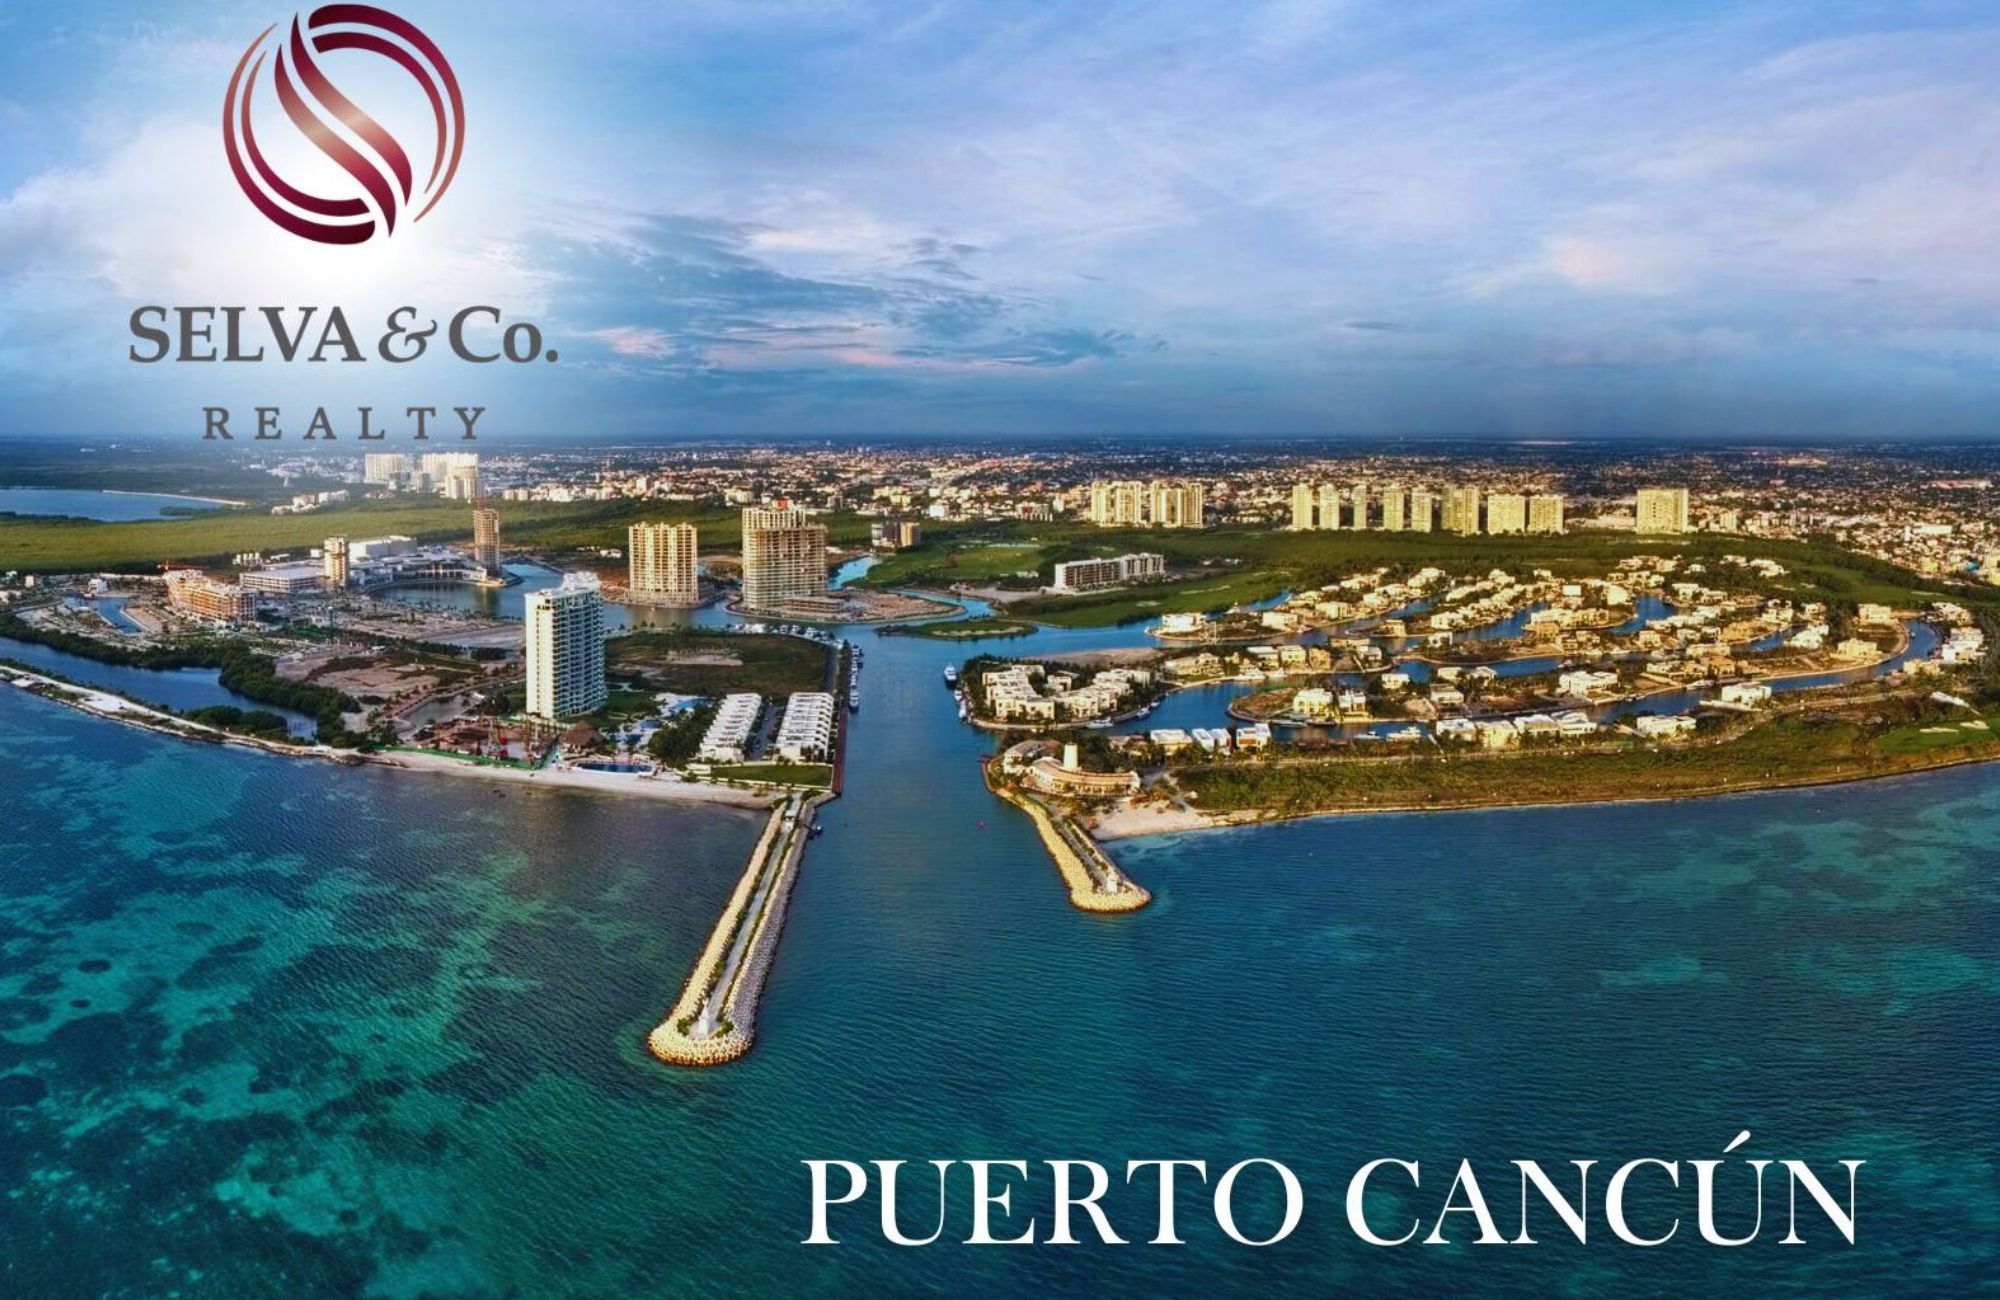 Luxury beachfront condo with private jacuzzi in Lahia Cancun